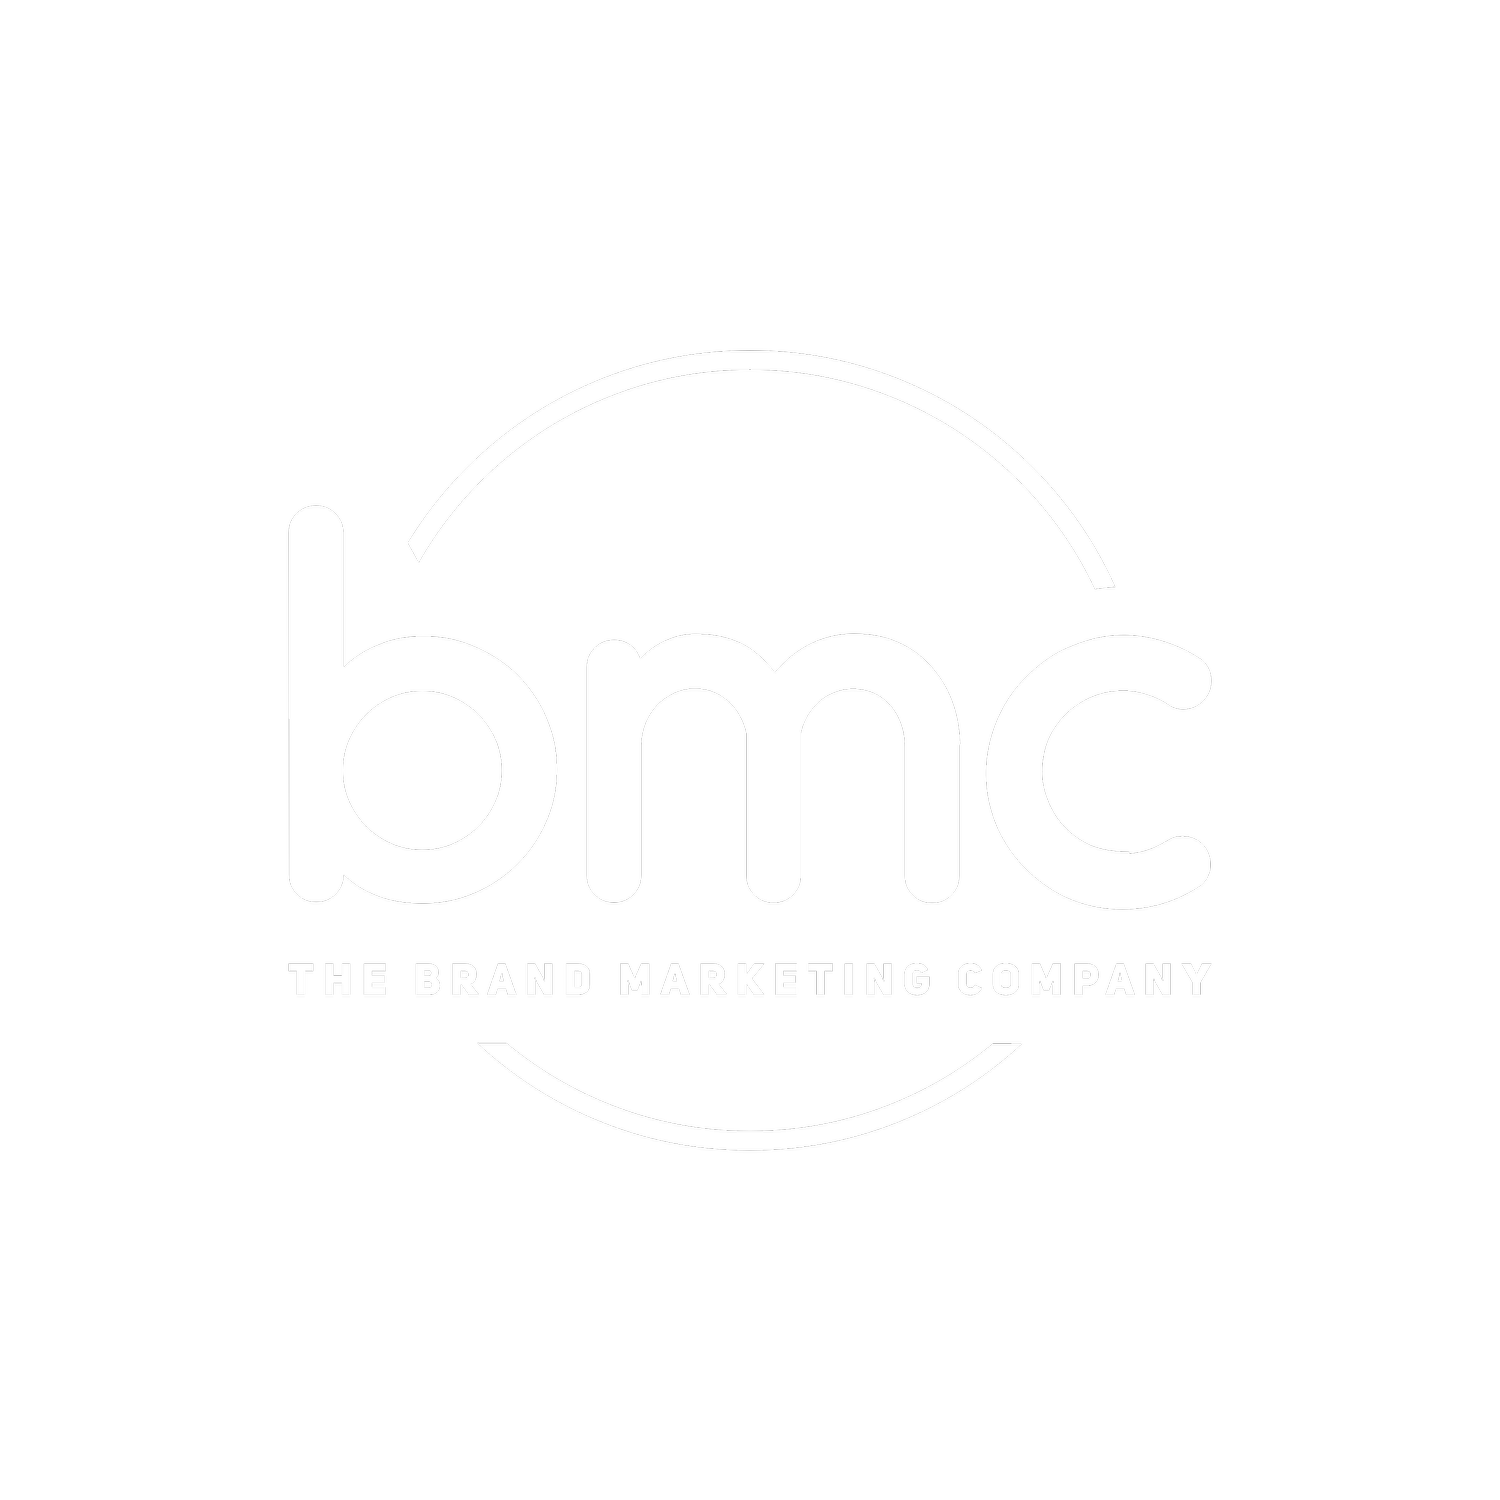 The Brand Marketing Company